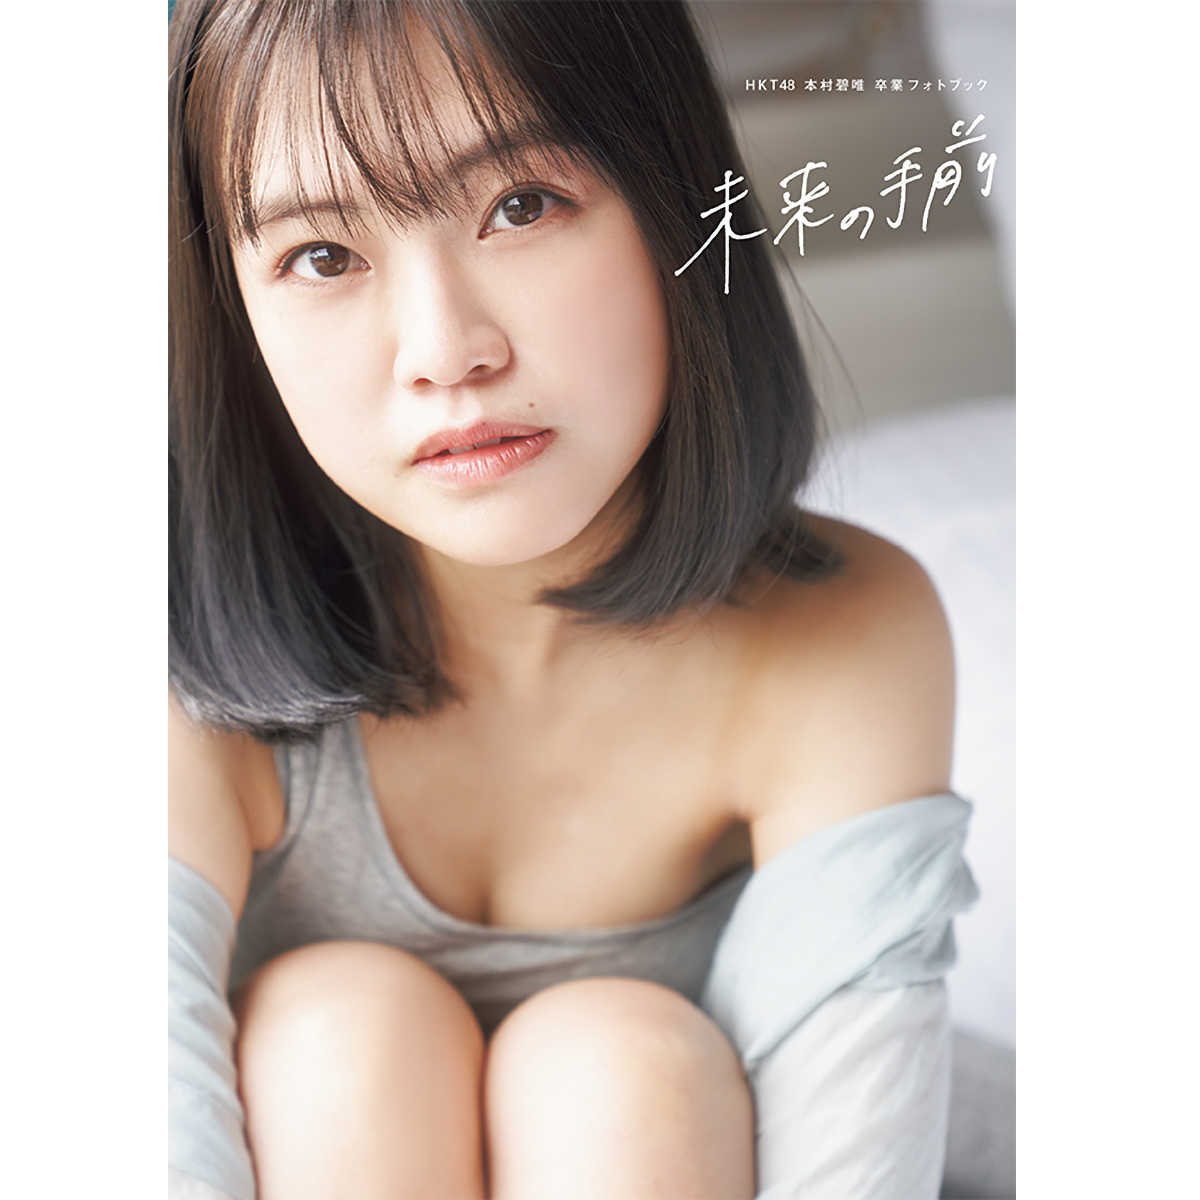 HKT48最後の1期生」本村碧唯の卒業フォトブックが7月7日に発売決定